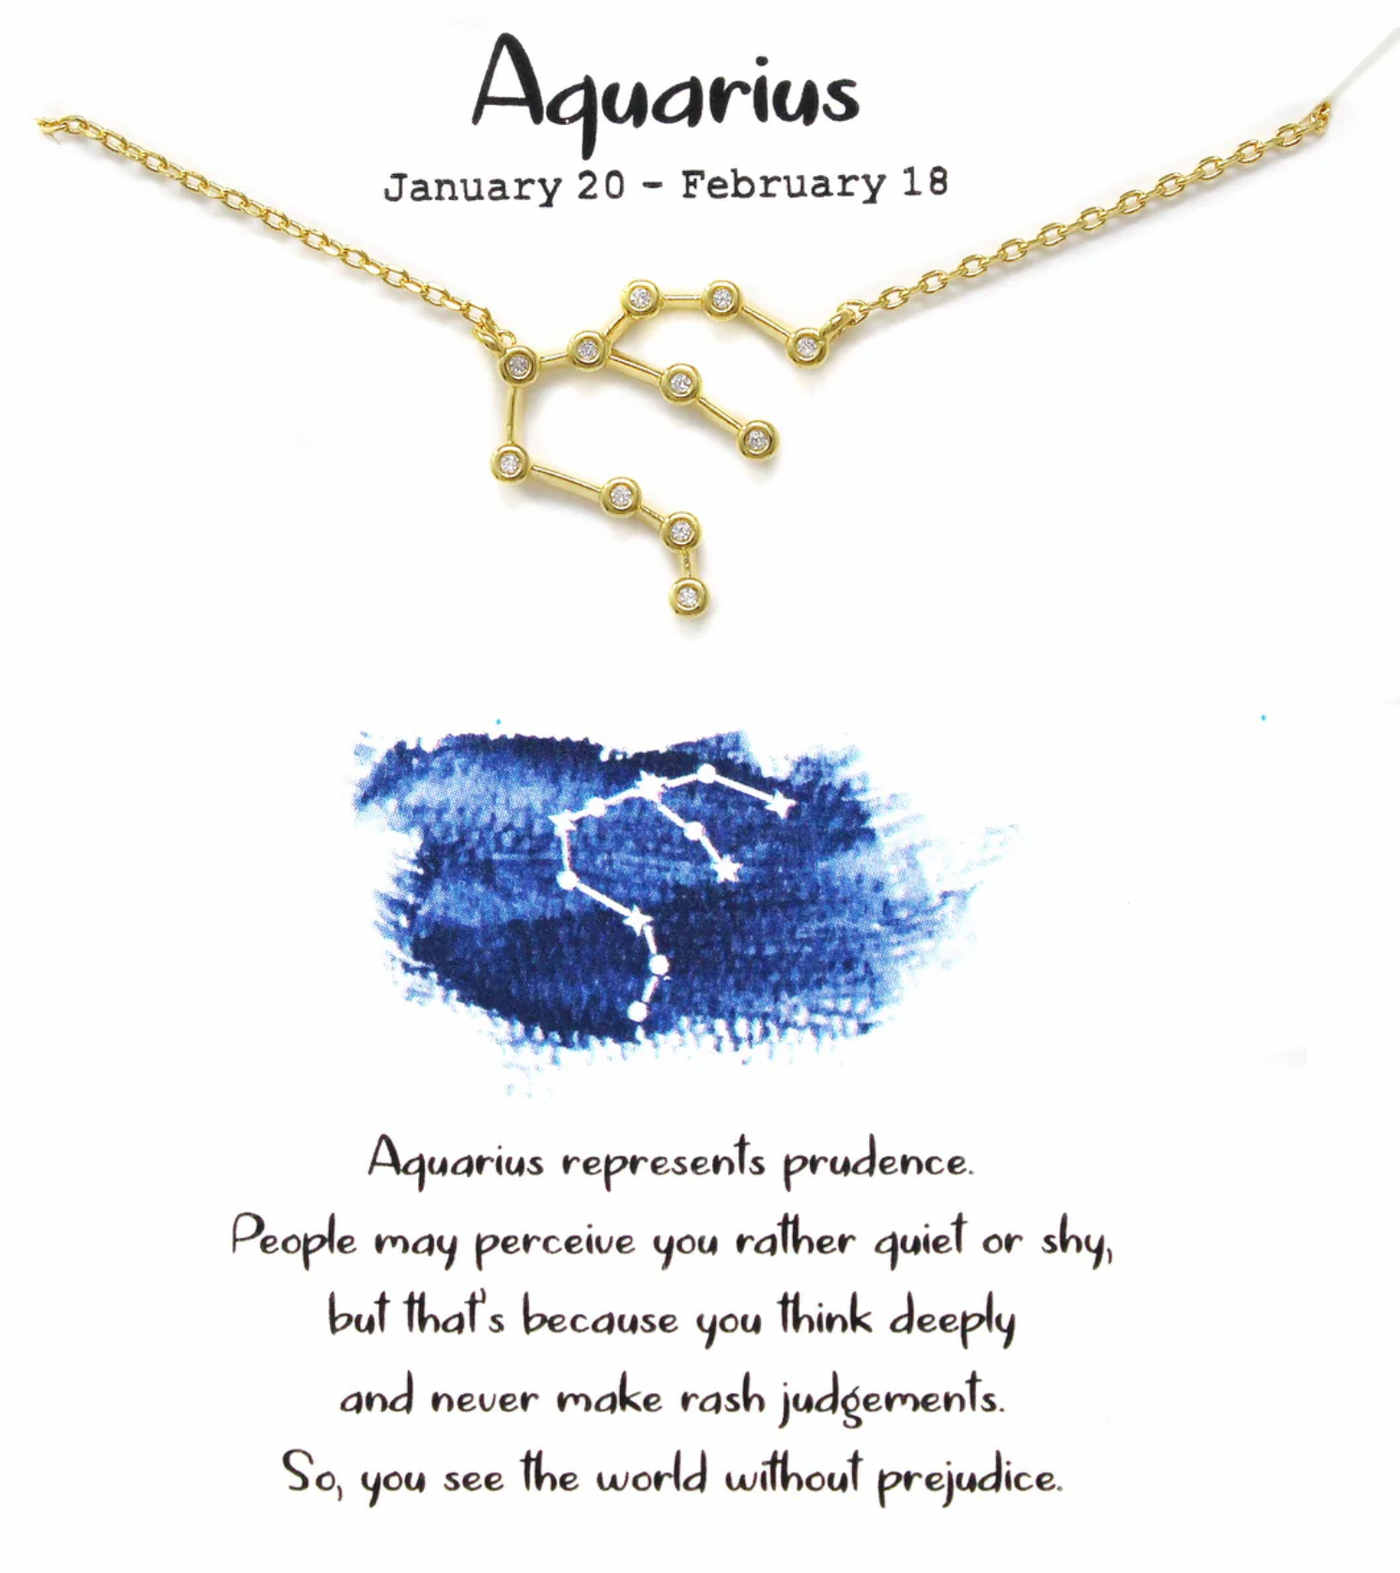 Aquarius Zodiac Sign Necklace January 20 - February 18